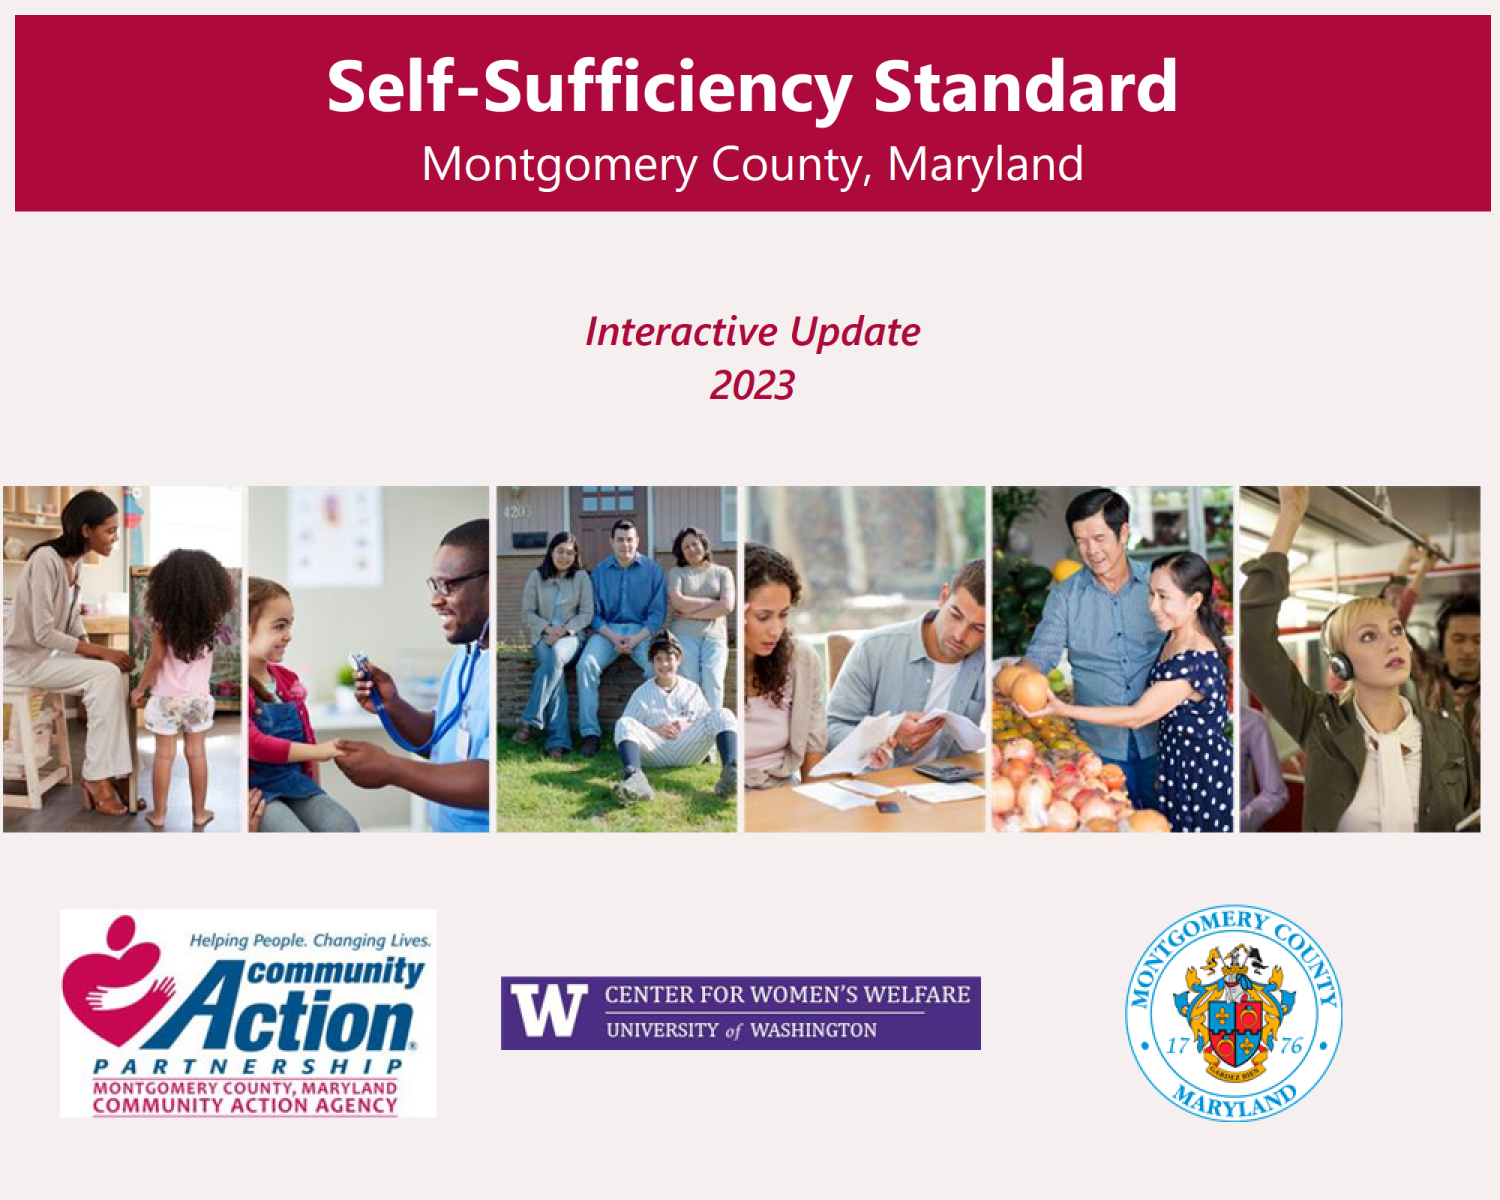 2023 Self-Sufficiency Standard Interactive Update